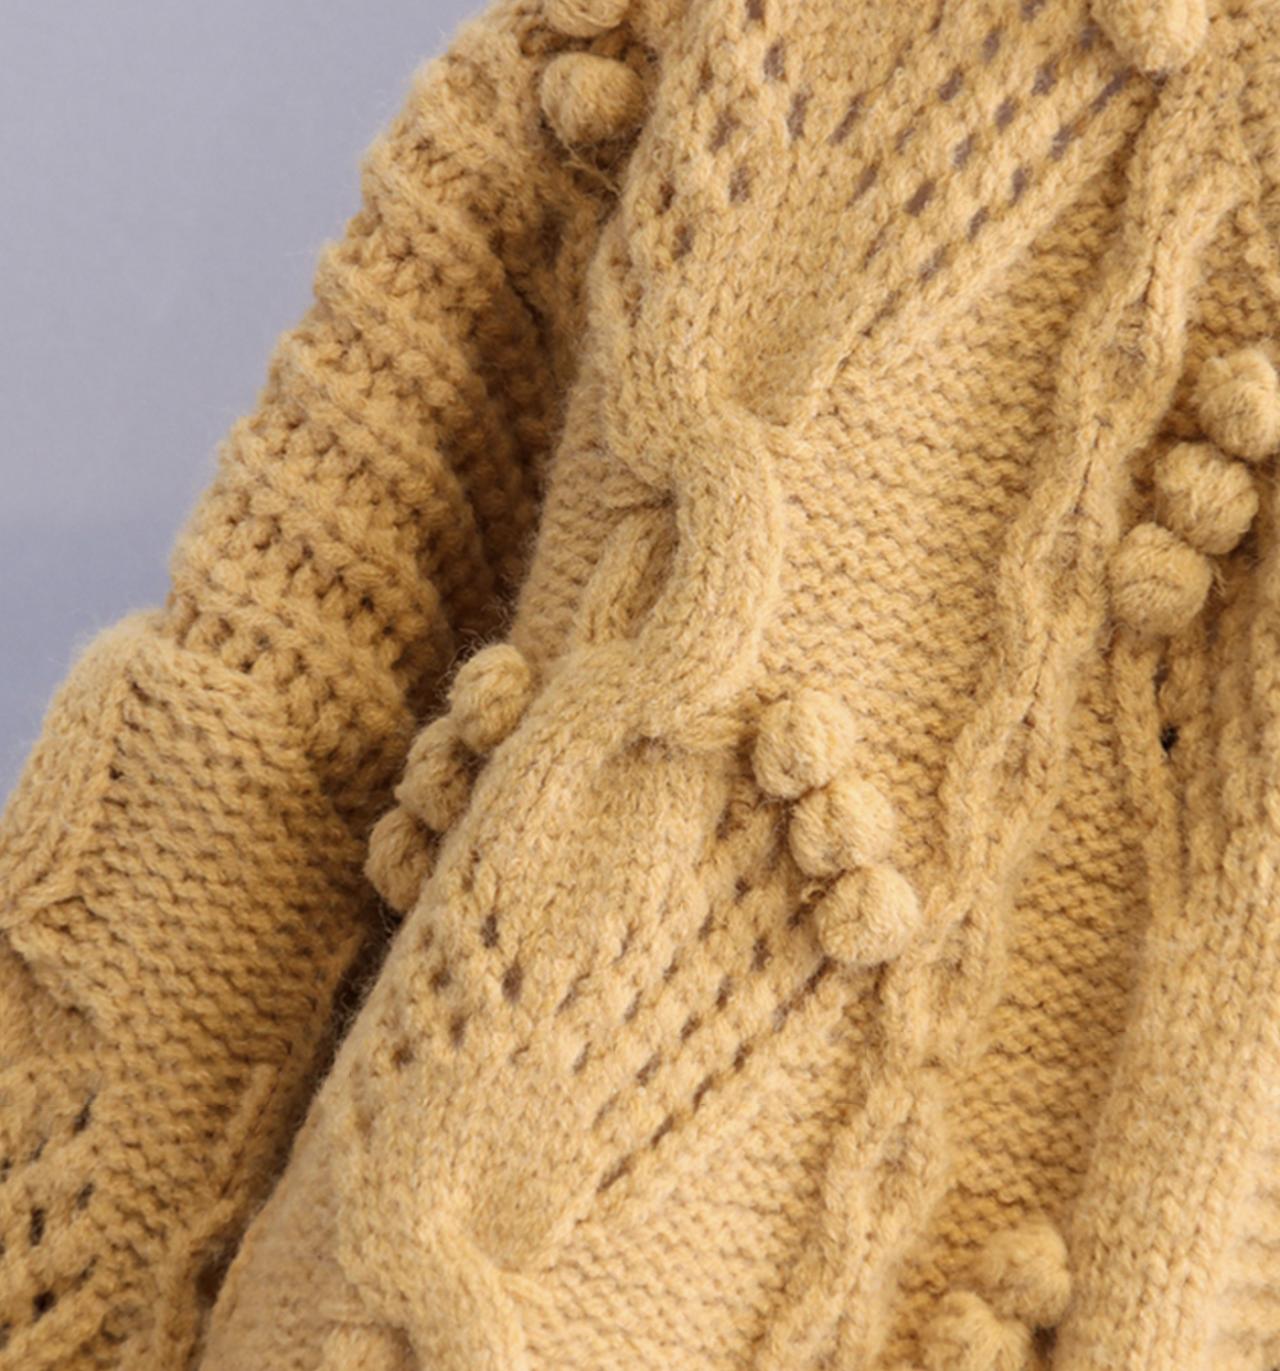 Retro knitted twist long sleeve sweater  014